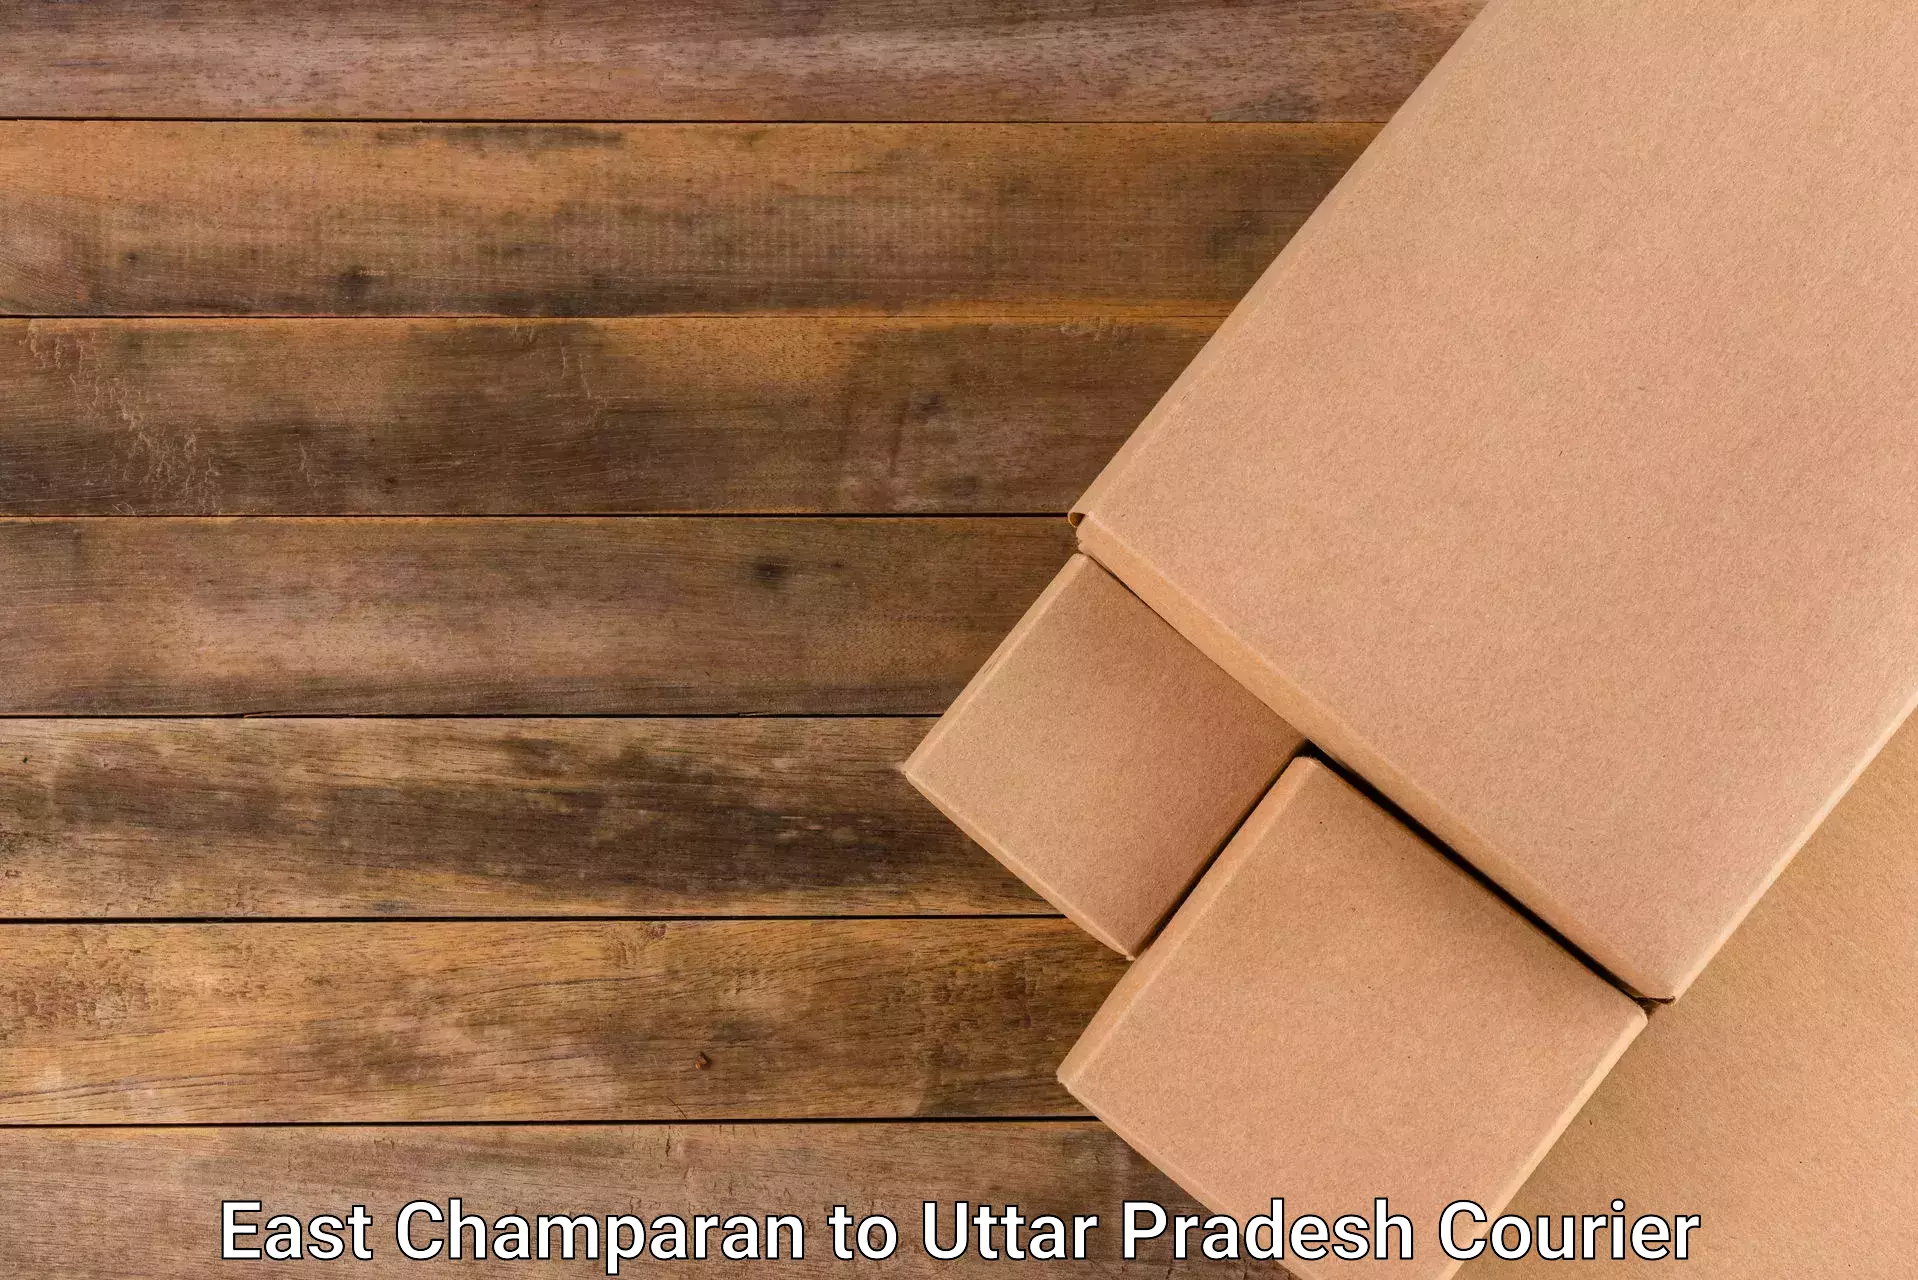 Delivery service partnership East Champaran to Uttar Pradesh